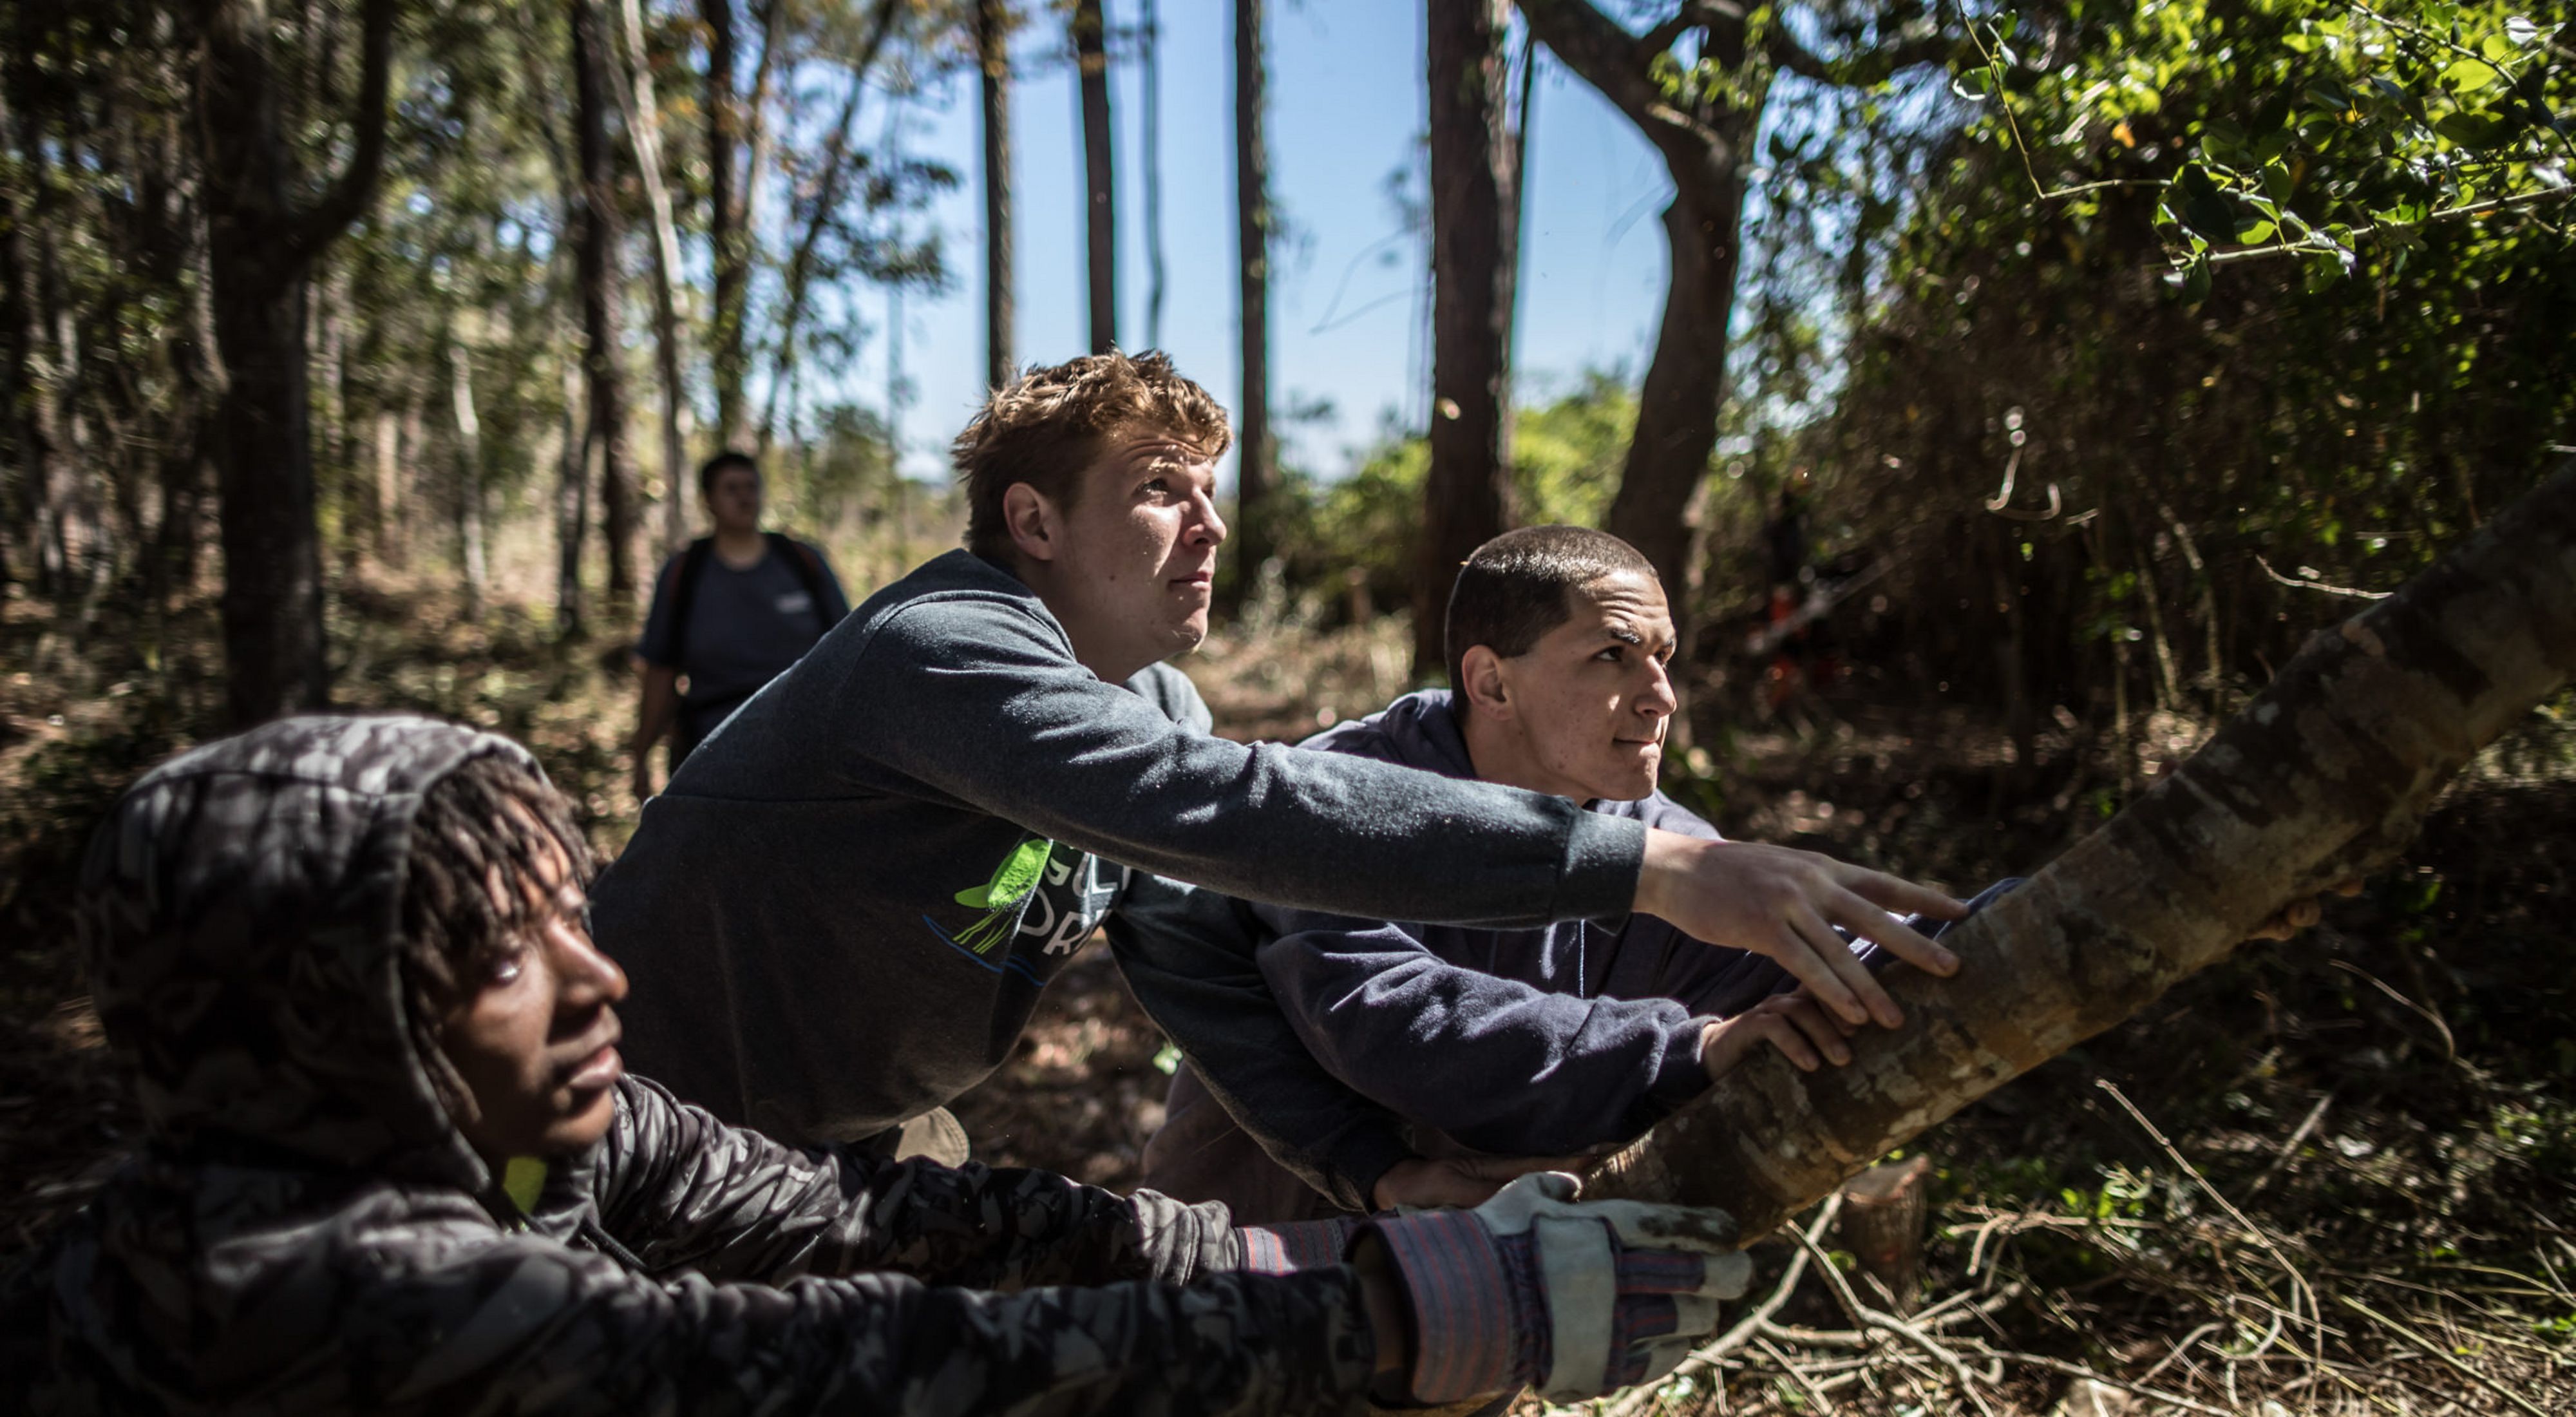 Three young men push down a cut tree to help restore habitat.